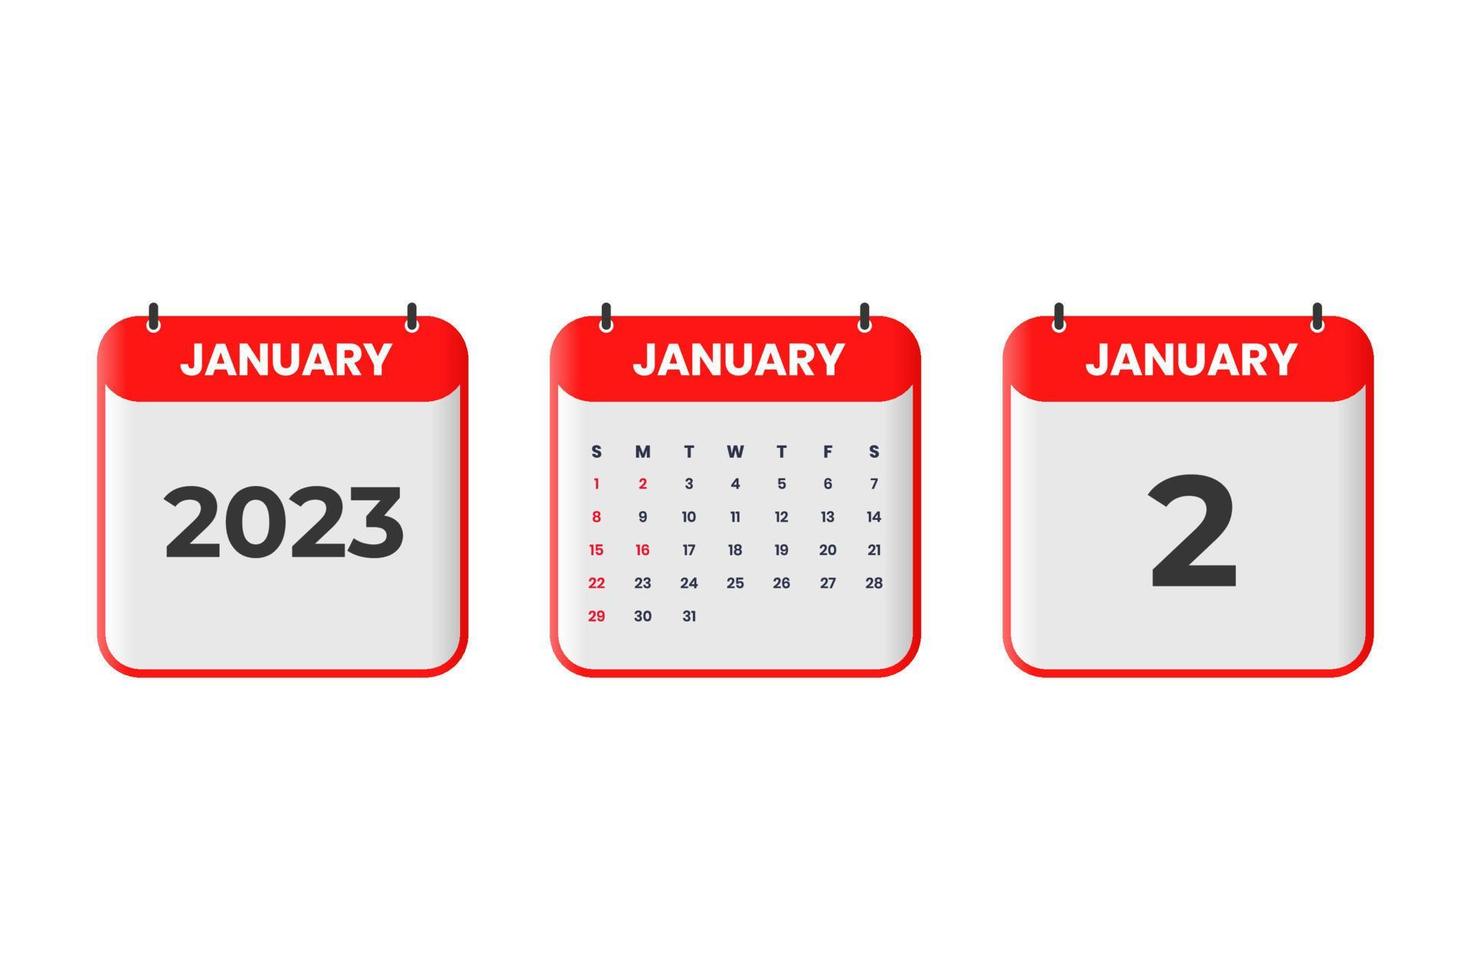 Januar 2023 Kalenderdesign. 2. januar 2023 kalendersymbol für zeitplan, termin, wichtiges datumskonzept vektor